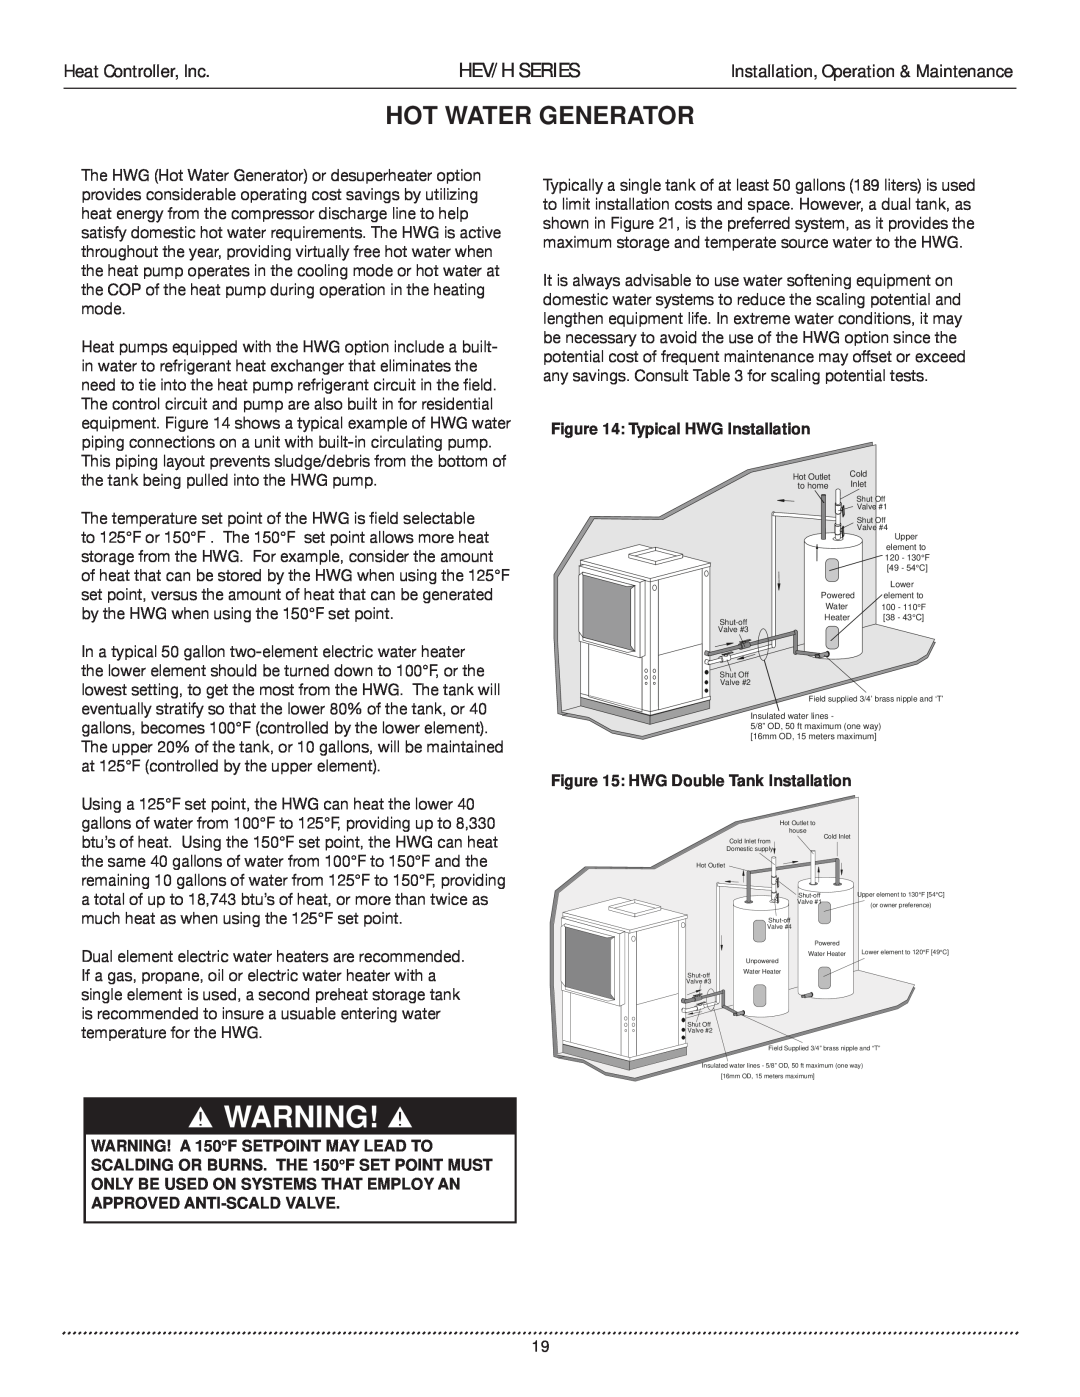 Heat Controller HEV/H manual Hot Water Generator, Hev/H Series, Heat Controller, Inc, Installation, Operation & Maintenance 